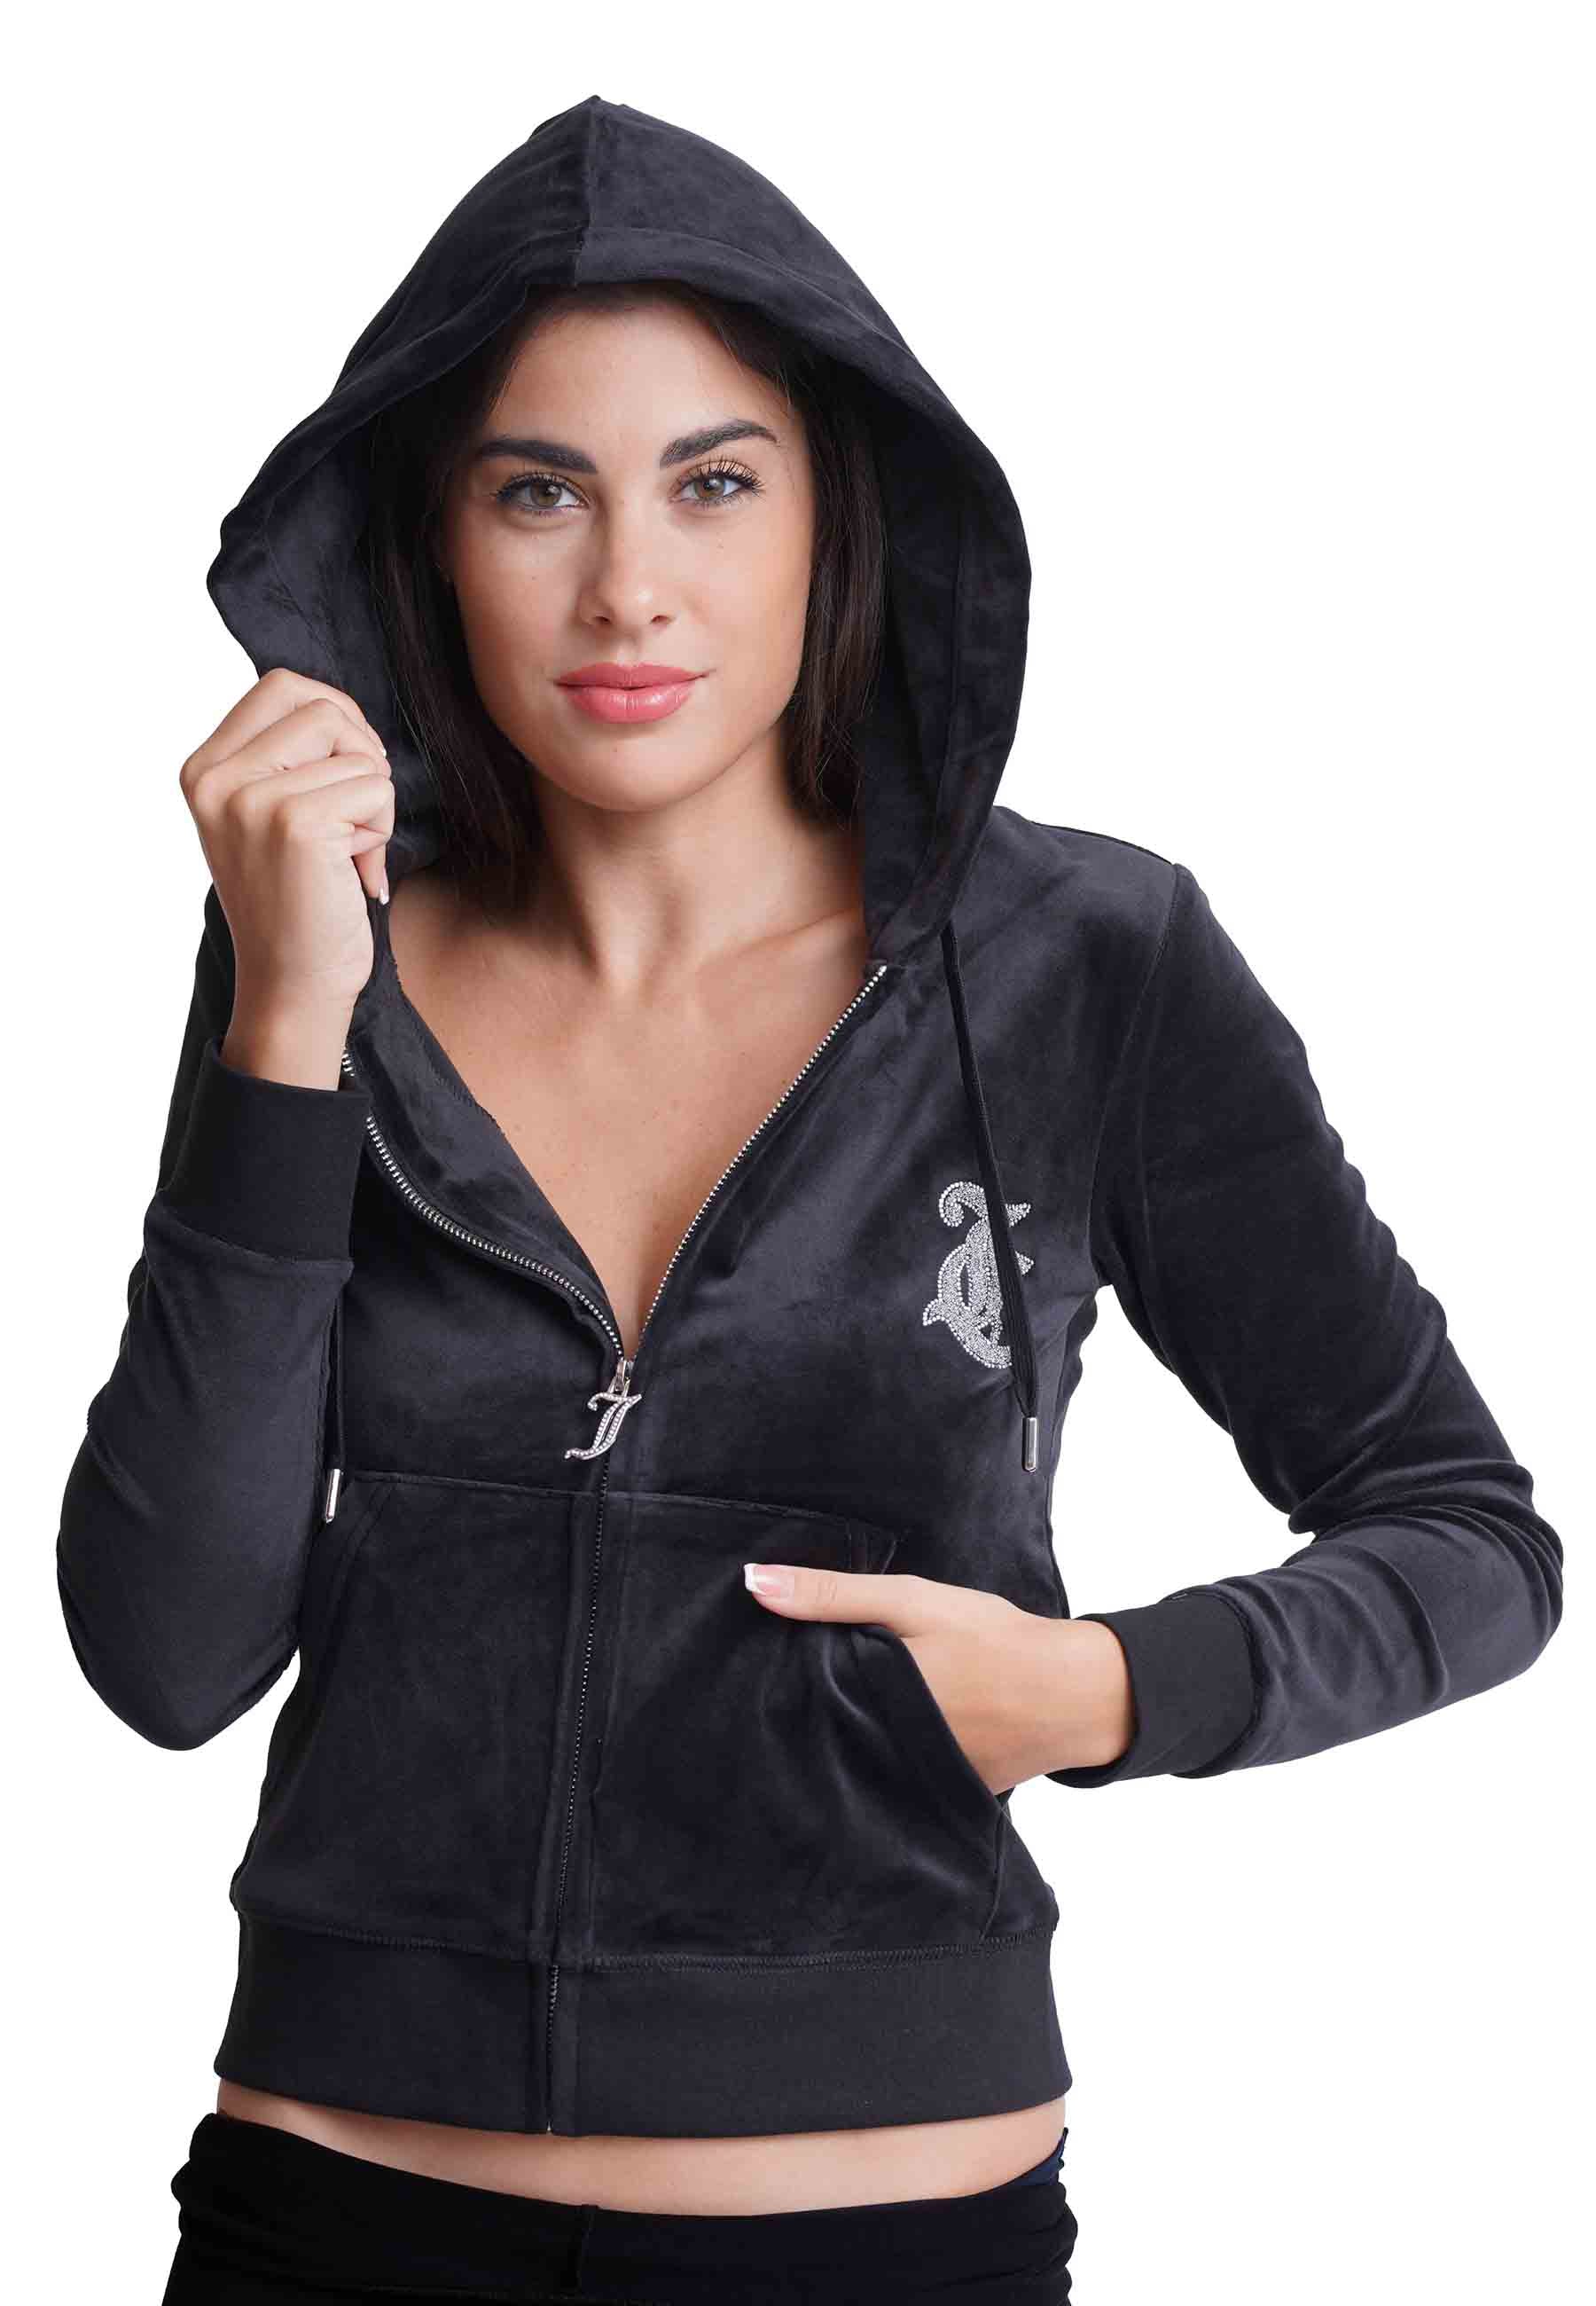 Diamond women's sweatshirt with hood in black velvet and rhinestones